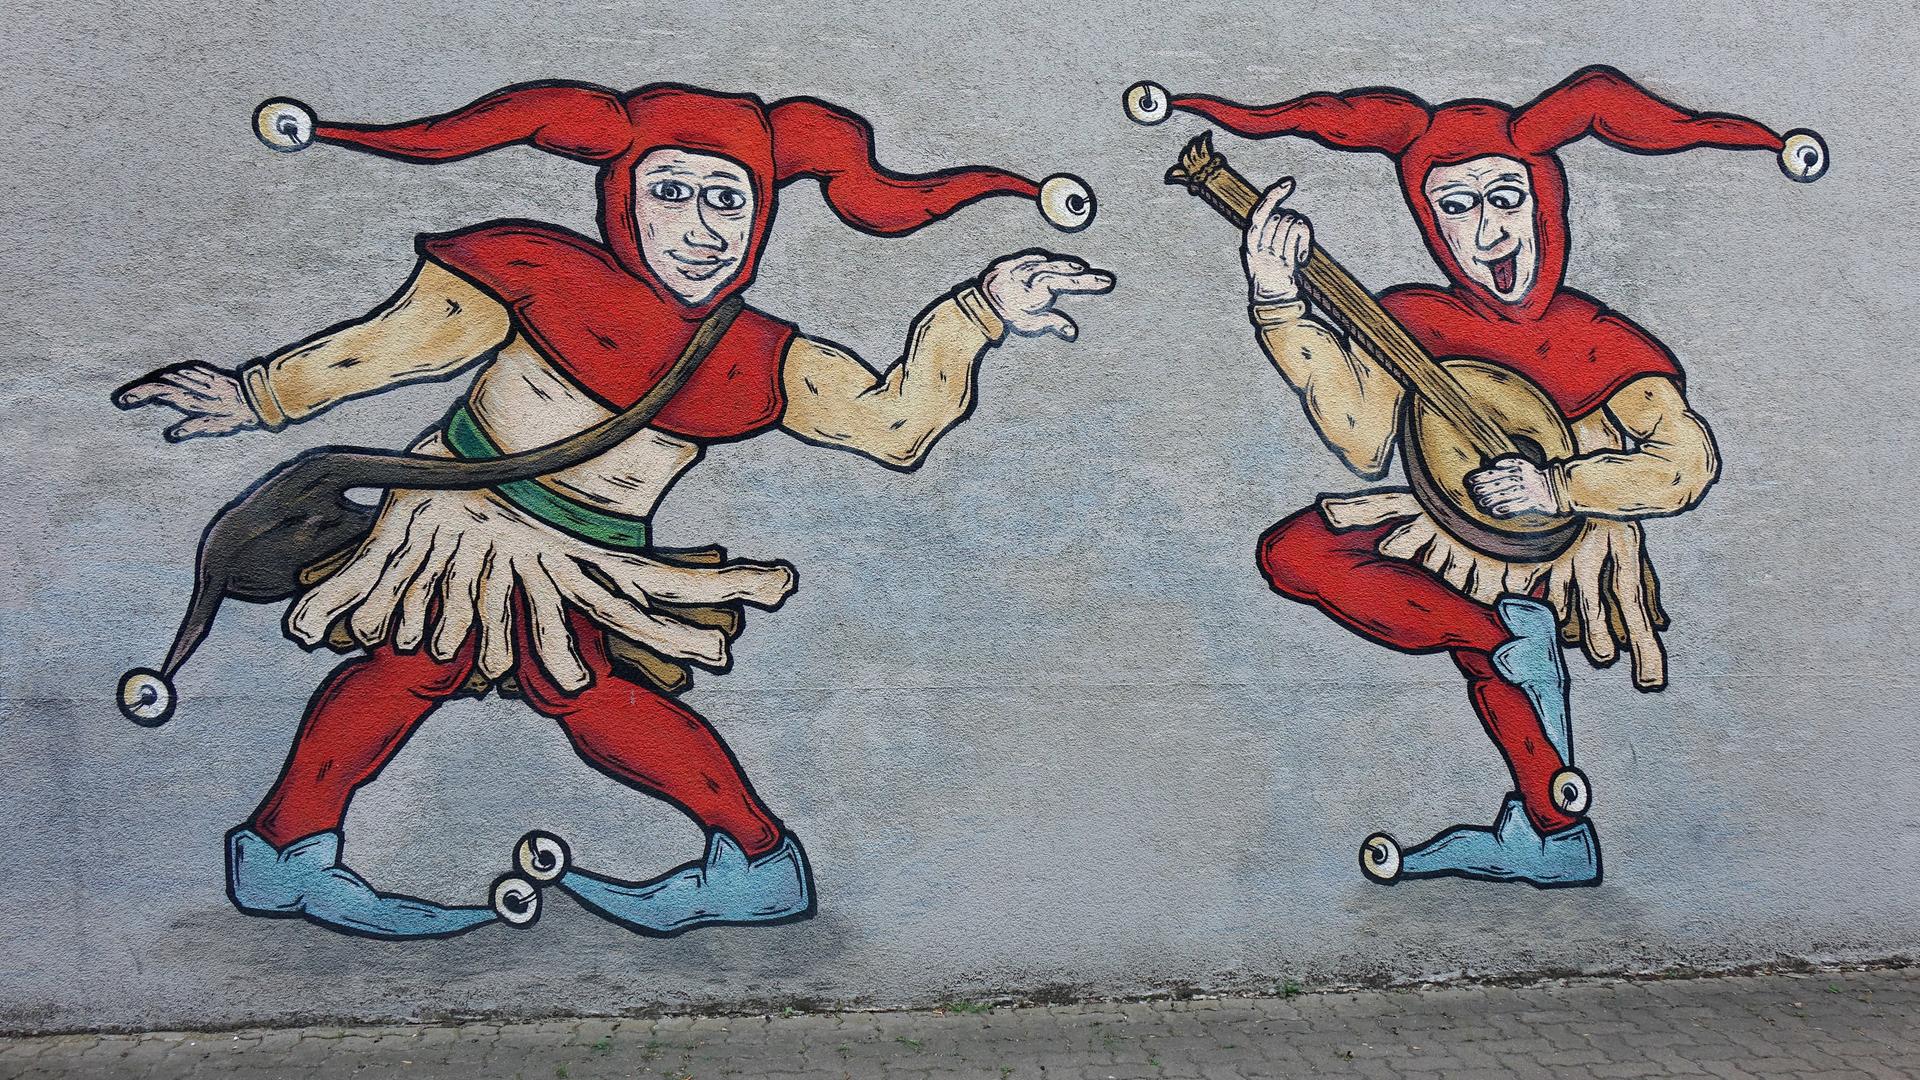 Zwei Hofnarren sind als Graffiti an einer Wand angebracht.  